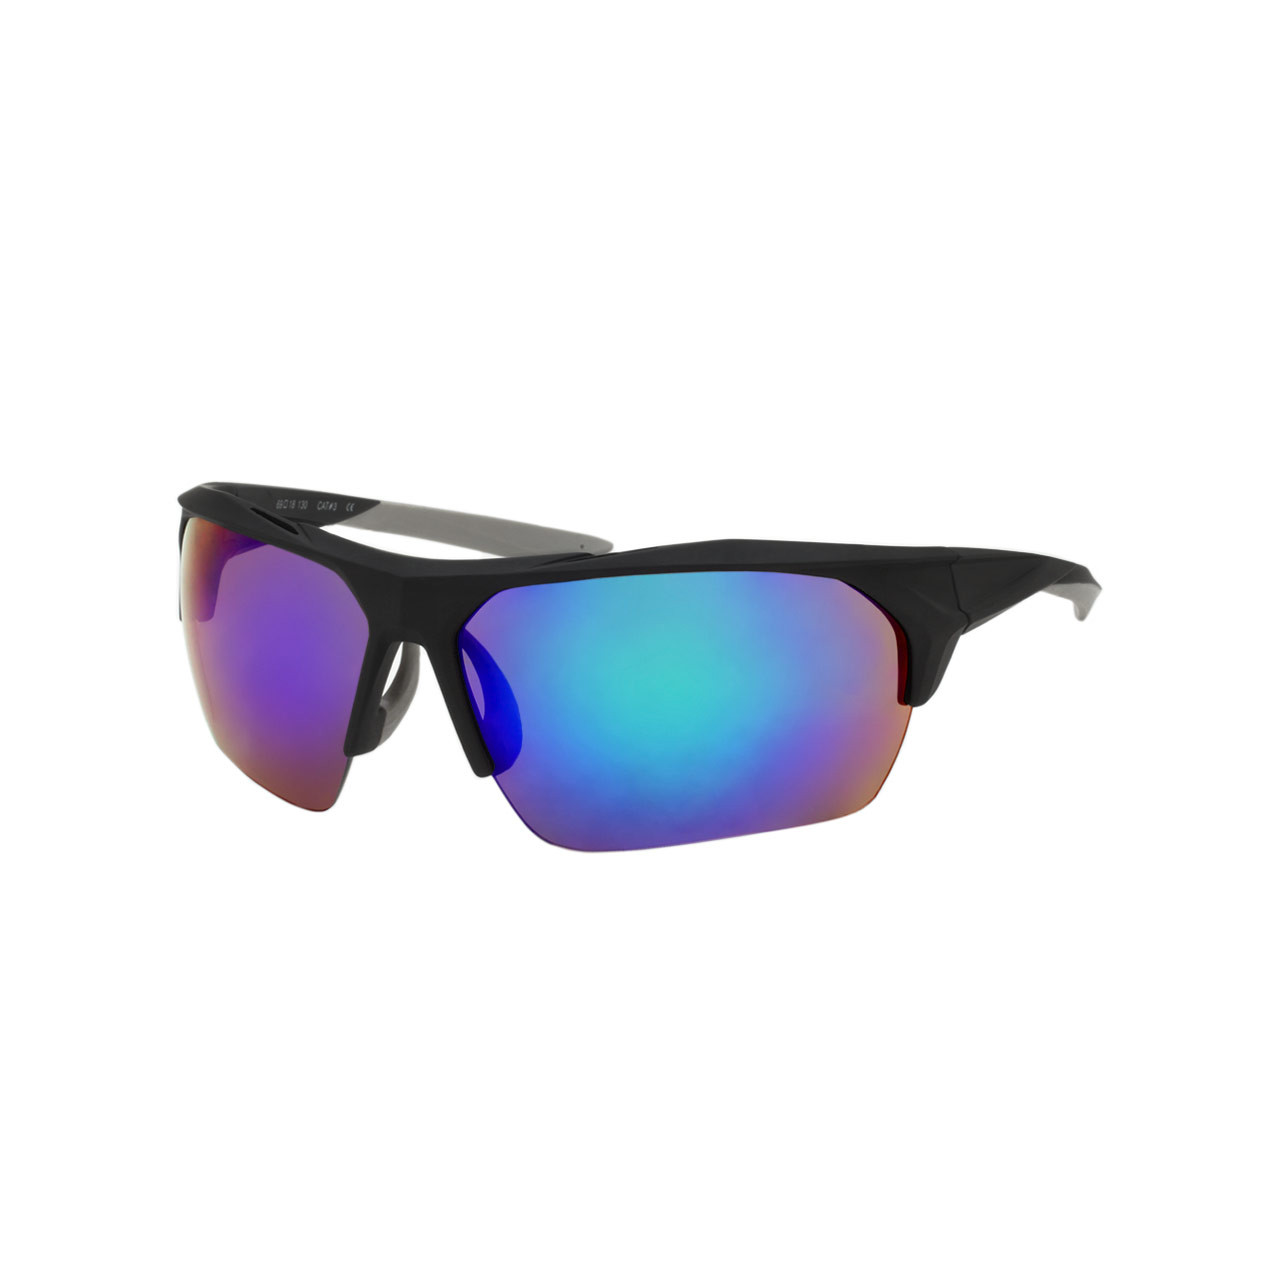 MENS SPORT SUNGLASSES WHOLESALE I ASST. 12 PCS I NS06ST - Shark Eyes, Inc.  - Wholesale Sunglasses, Reading Glasses, & Displays